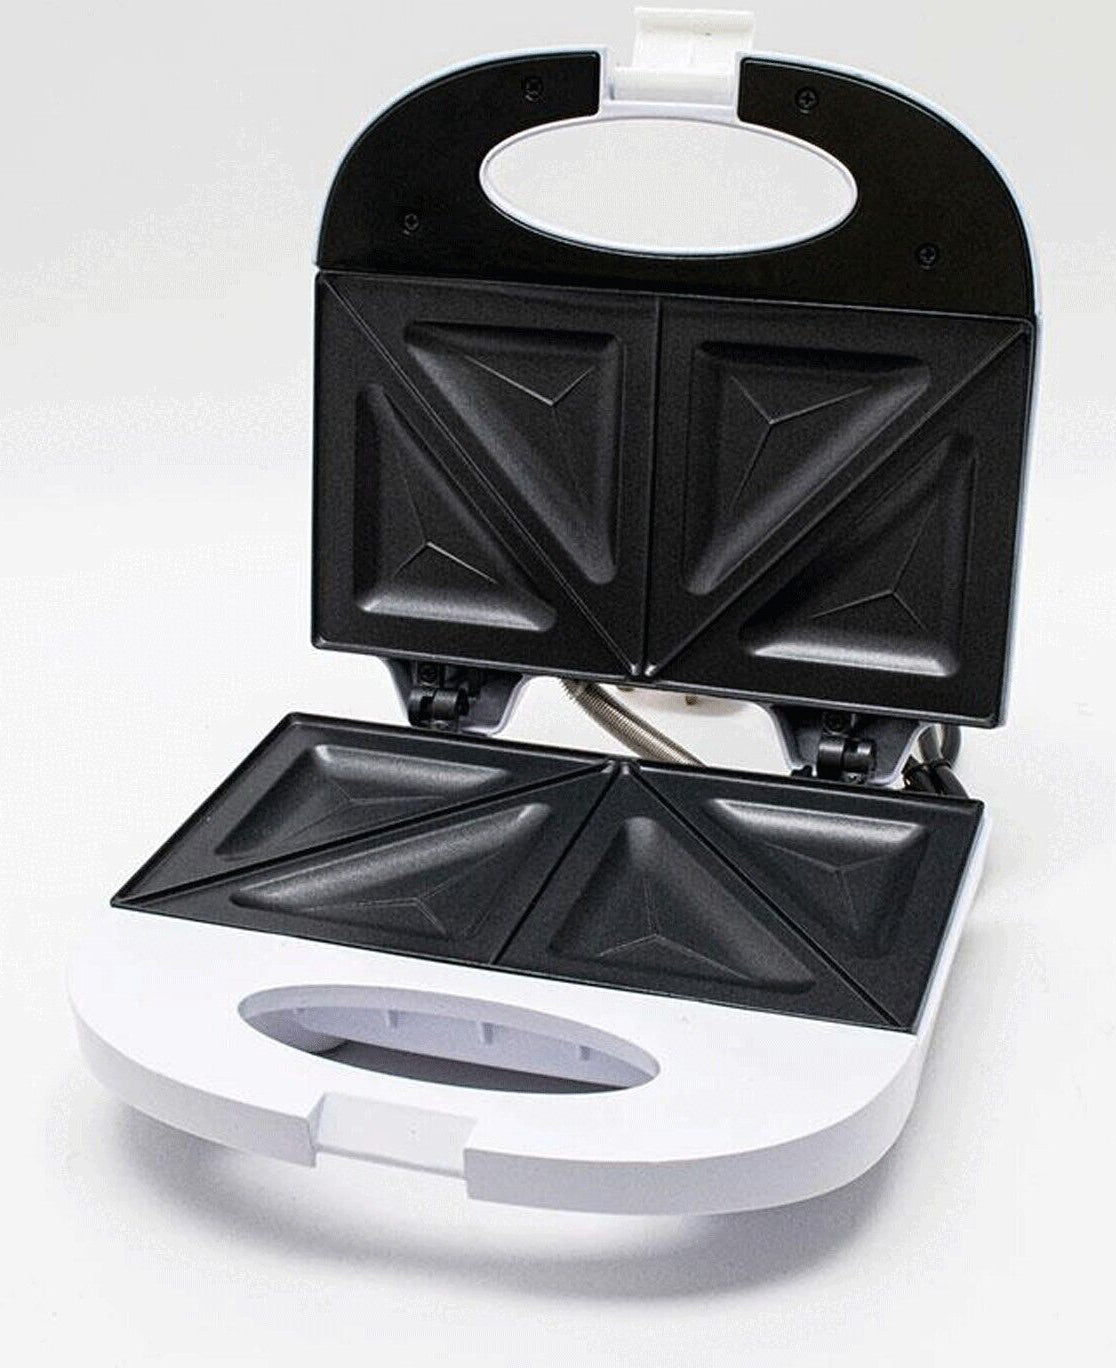 White Daewoo Electric 2 Portion Sandwich Toaster - 2 Slice (SDA2456)